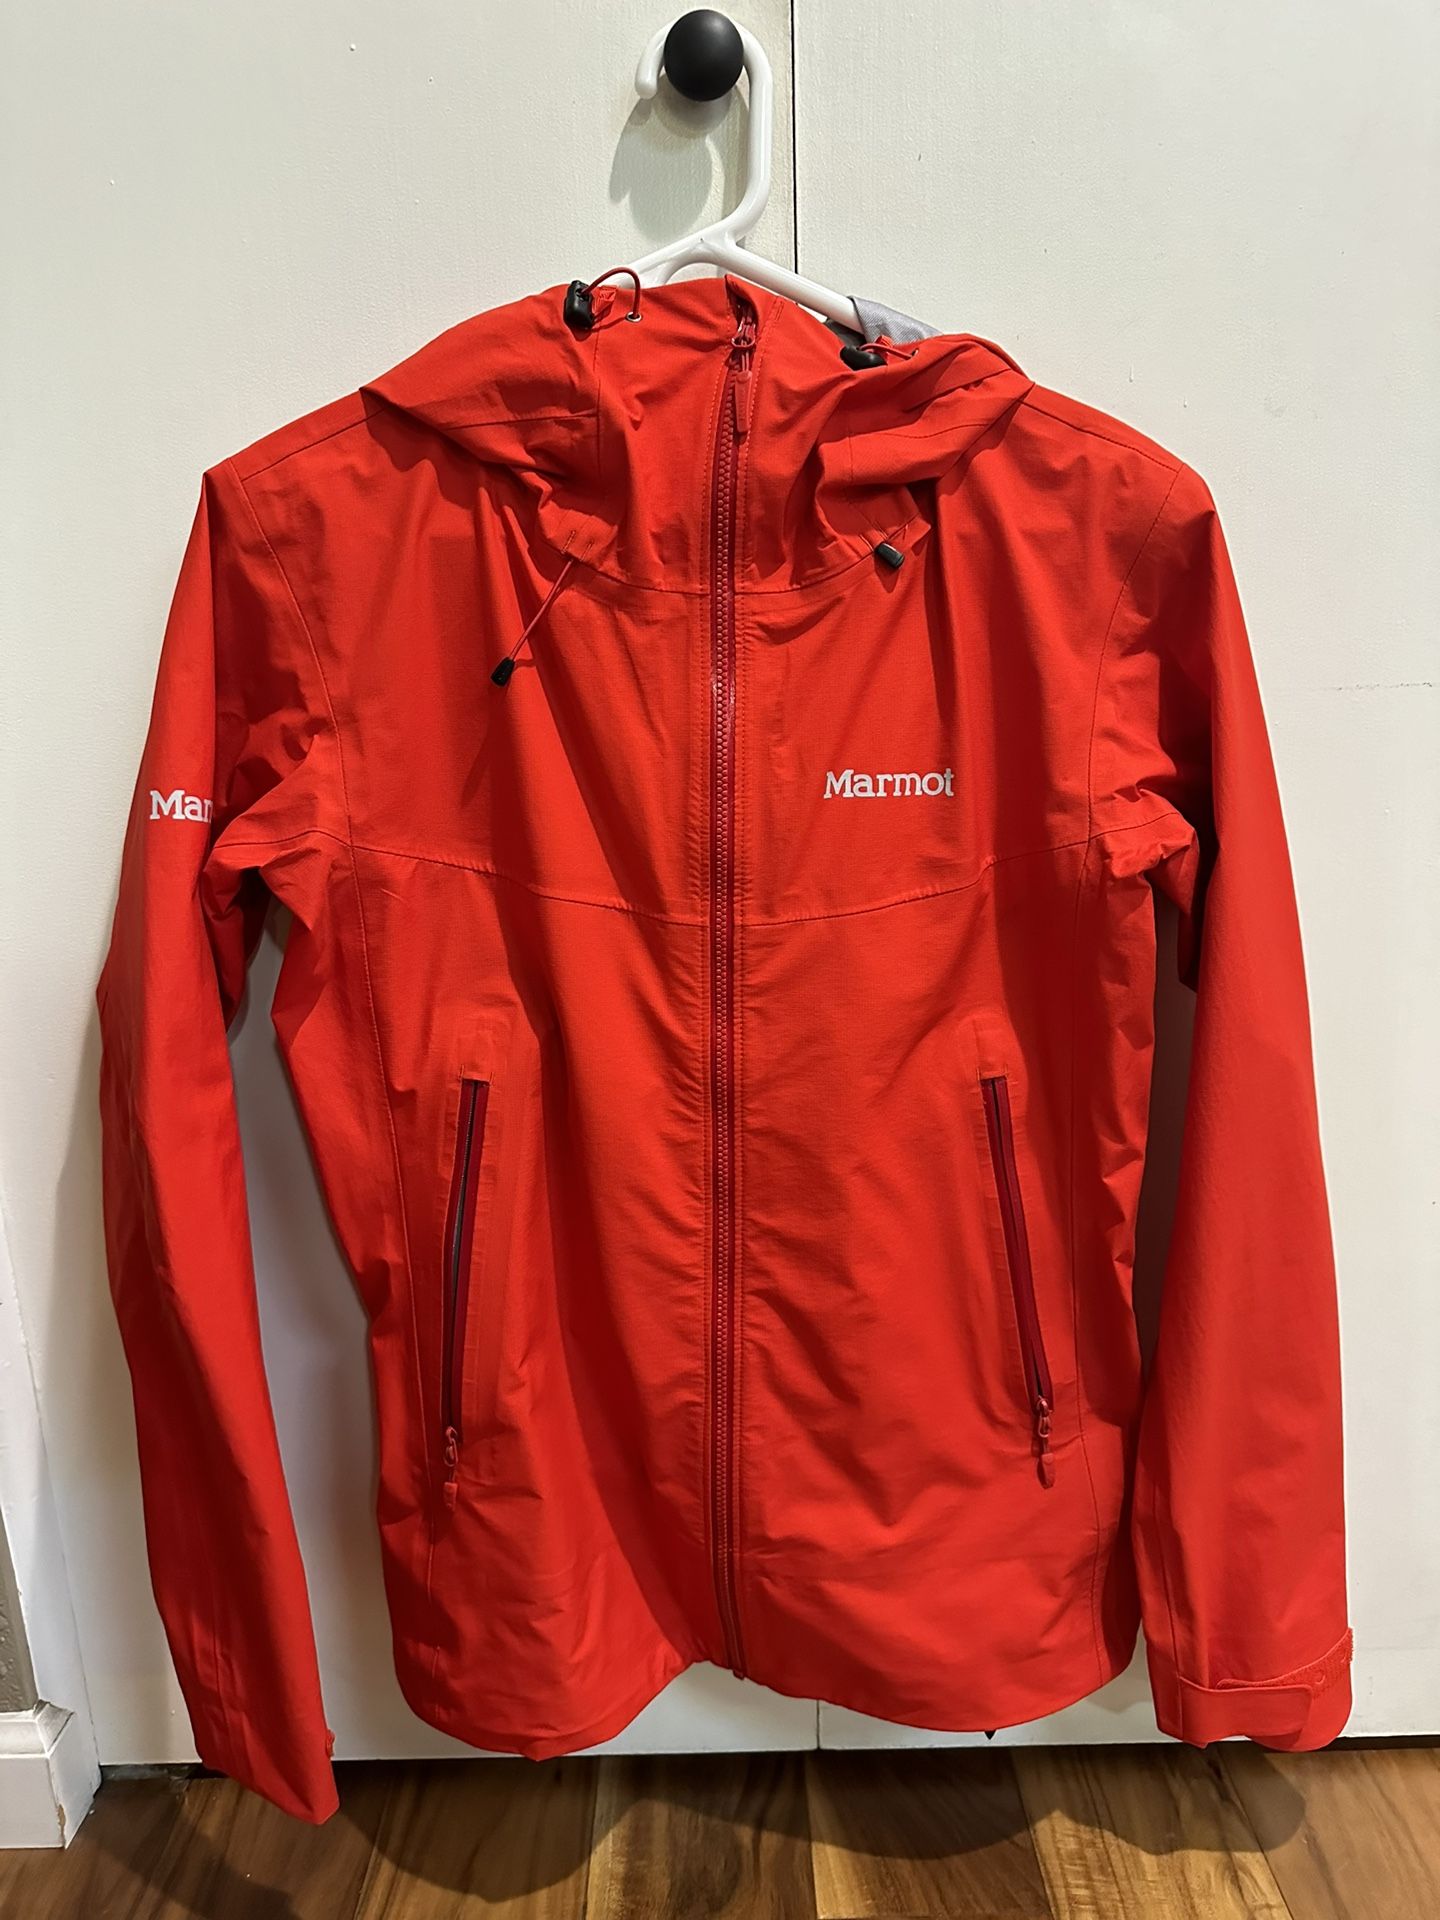 Marmot Women’s Medium Ski Jacket/Rain Jacket